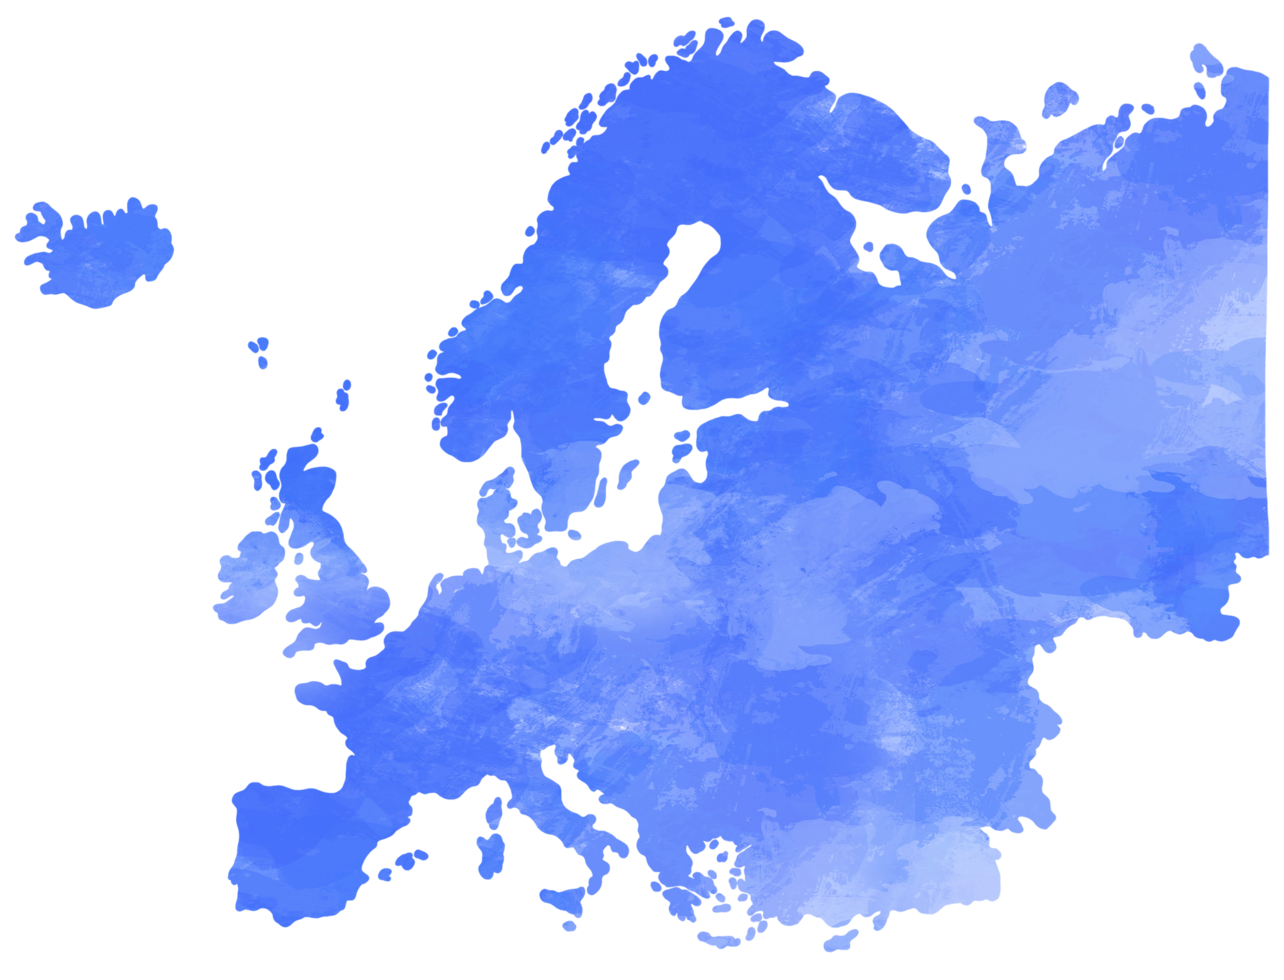 dibujo a mano alzada del mapa de Europa. png